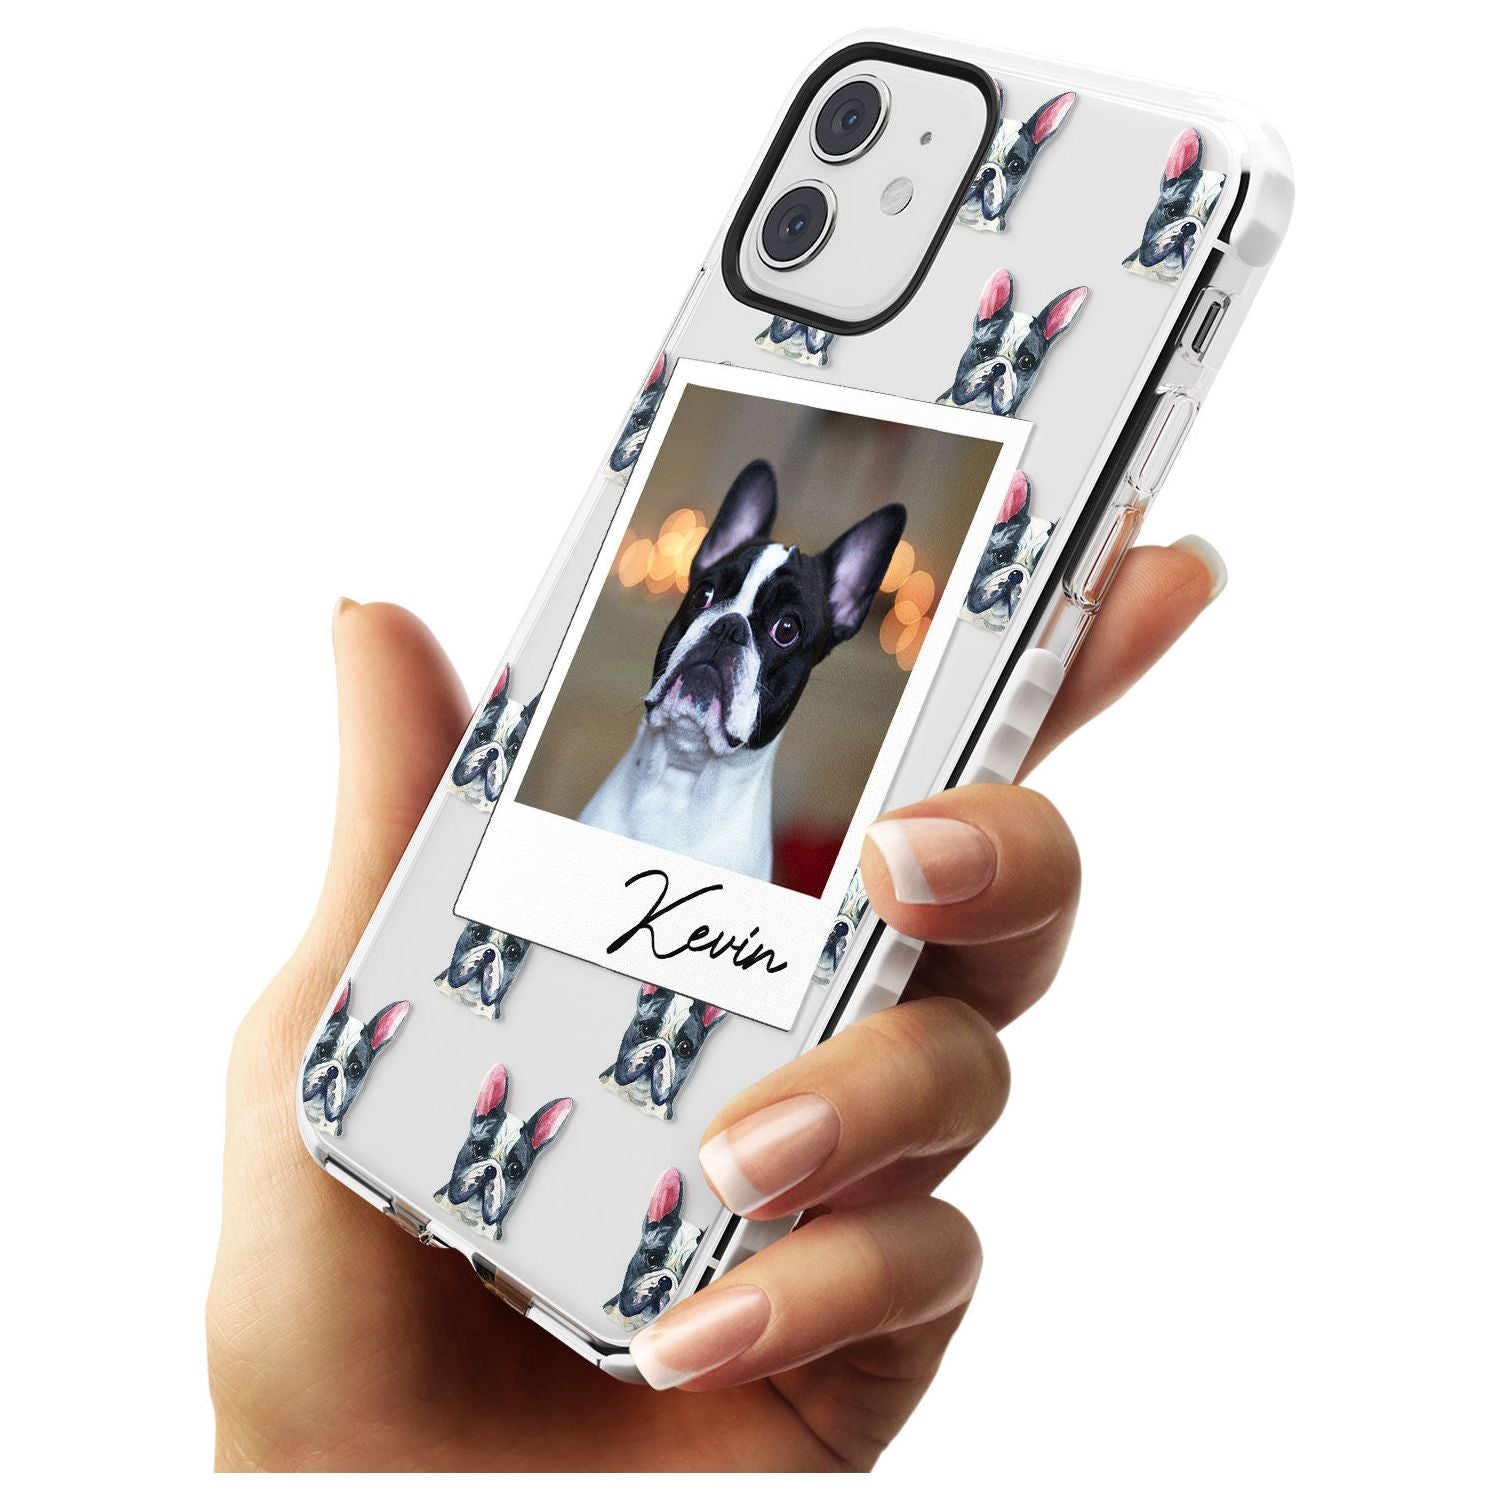 French Bulldog, Black & White - Custom Dog Photo Slim TPU Phone Case for iPhone 11